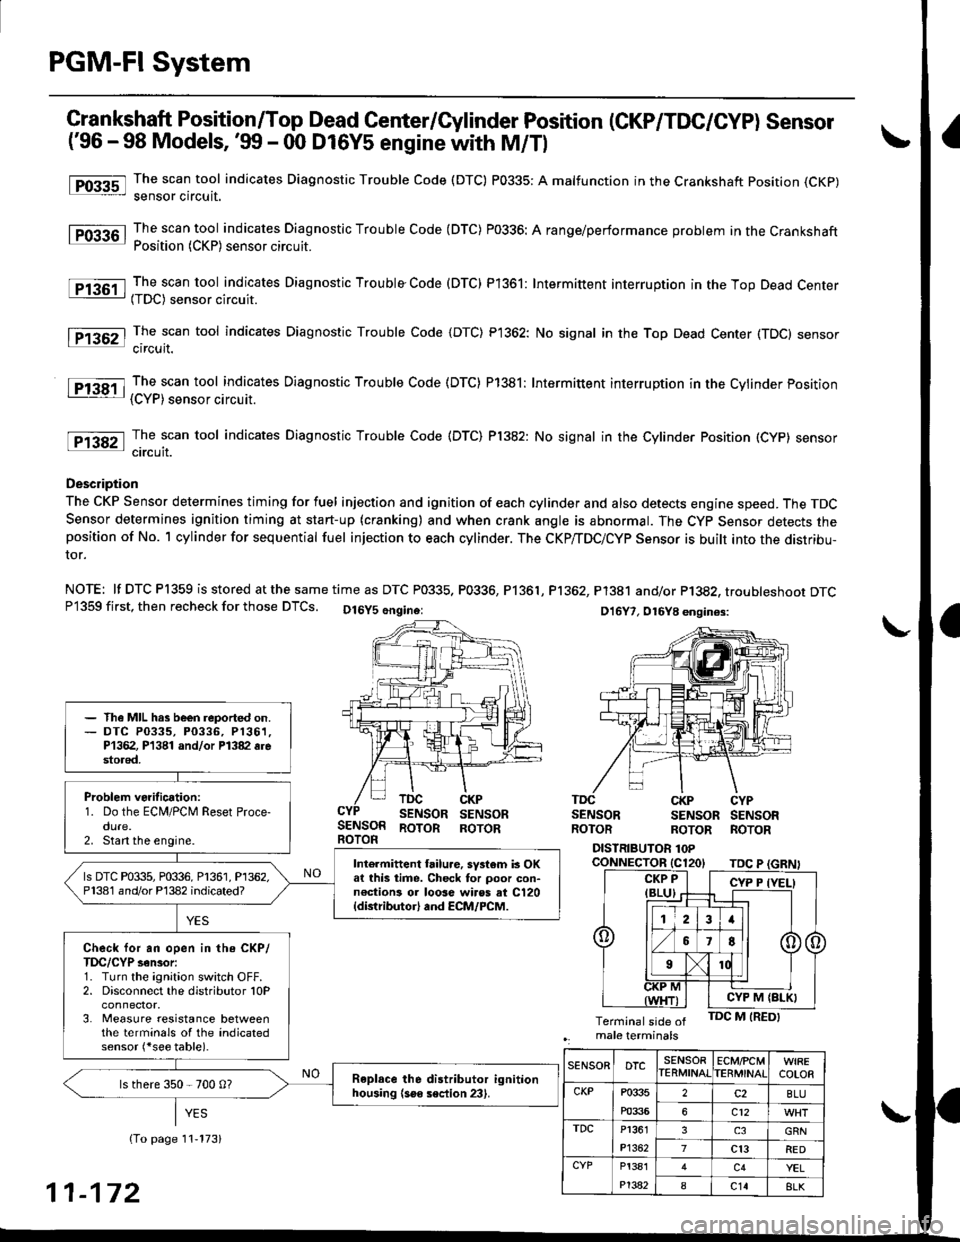 HONDA CIVIC 1999 6.G Owners Manual PGM-FI System
tFos3sl
tFffi6l
tPr361 I
fPfi62l
fFr38il
tF13s2-l
Crankshaft Position/Top Dead Genter/Gylinder Position (CKP/TDC/CYP) Sensor
(96 - 98 Models, !n - 00 D16Y5 engine with M/Tl
The scan to